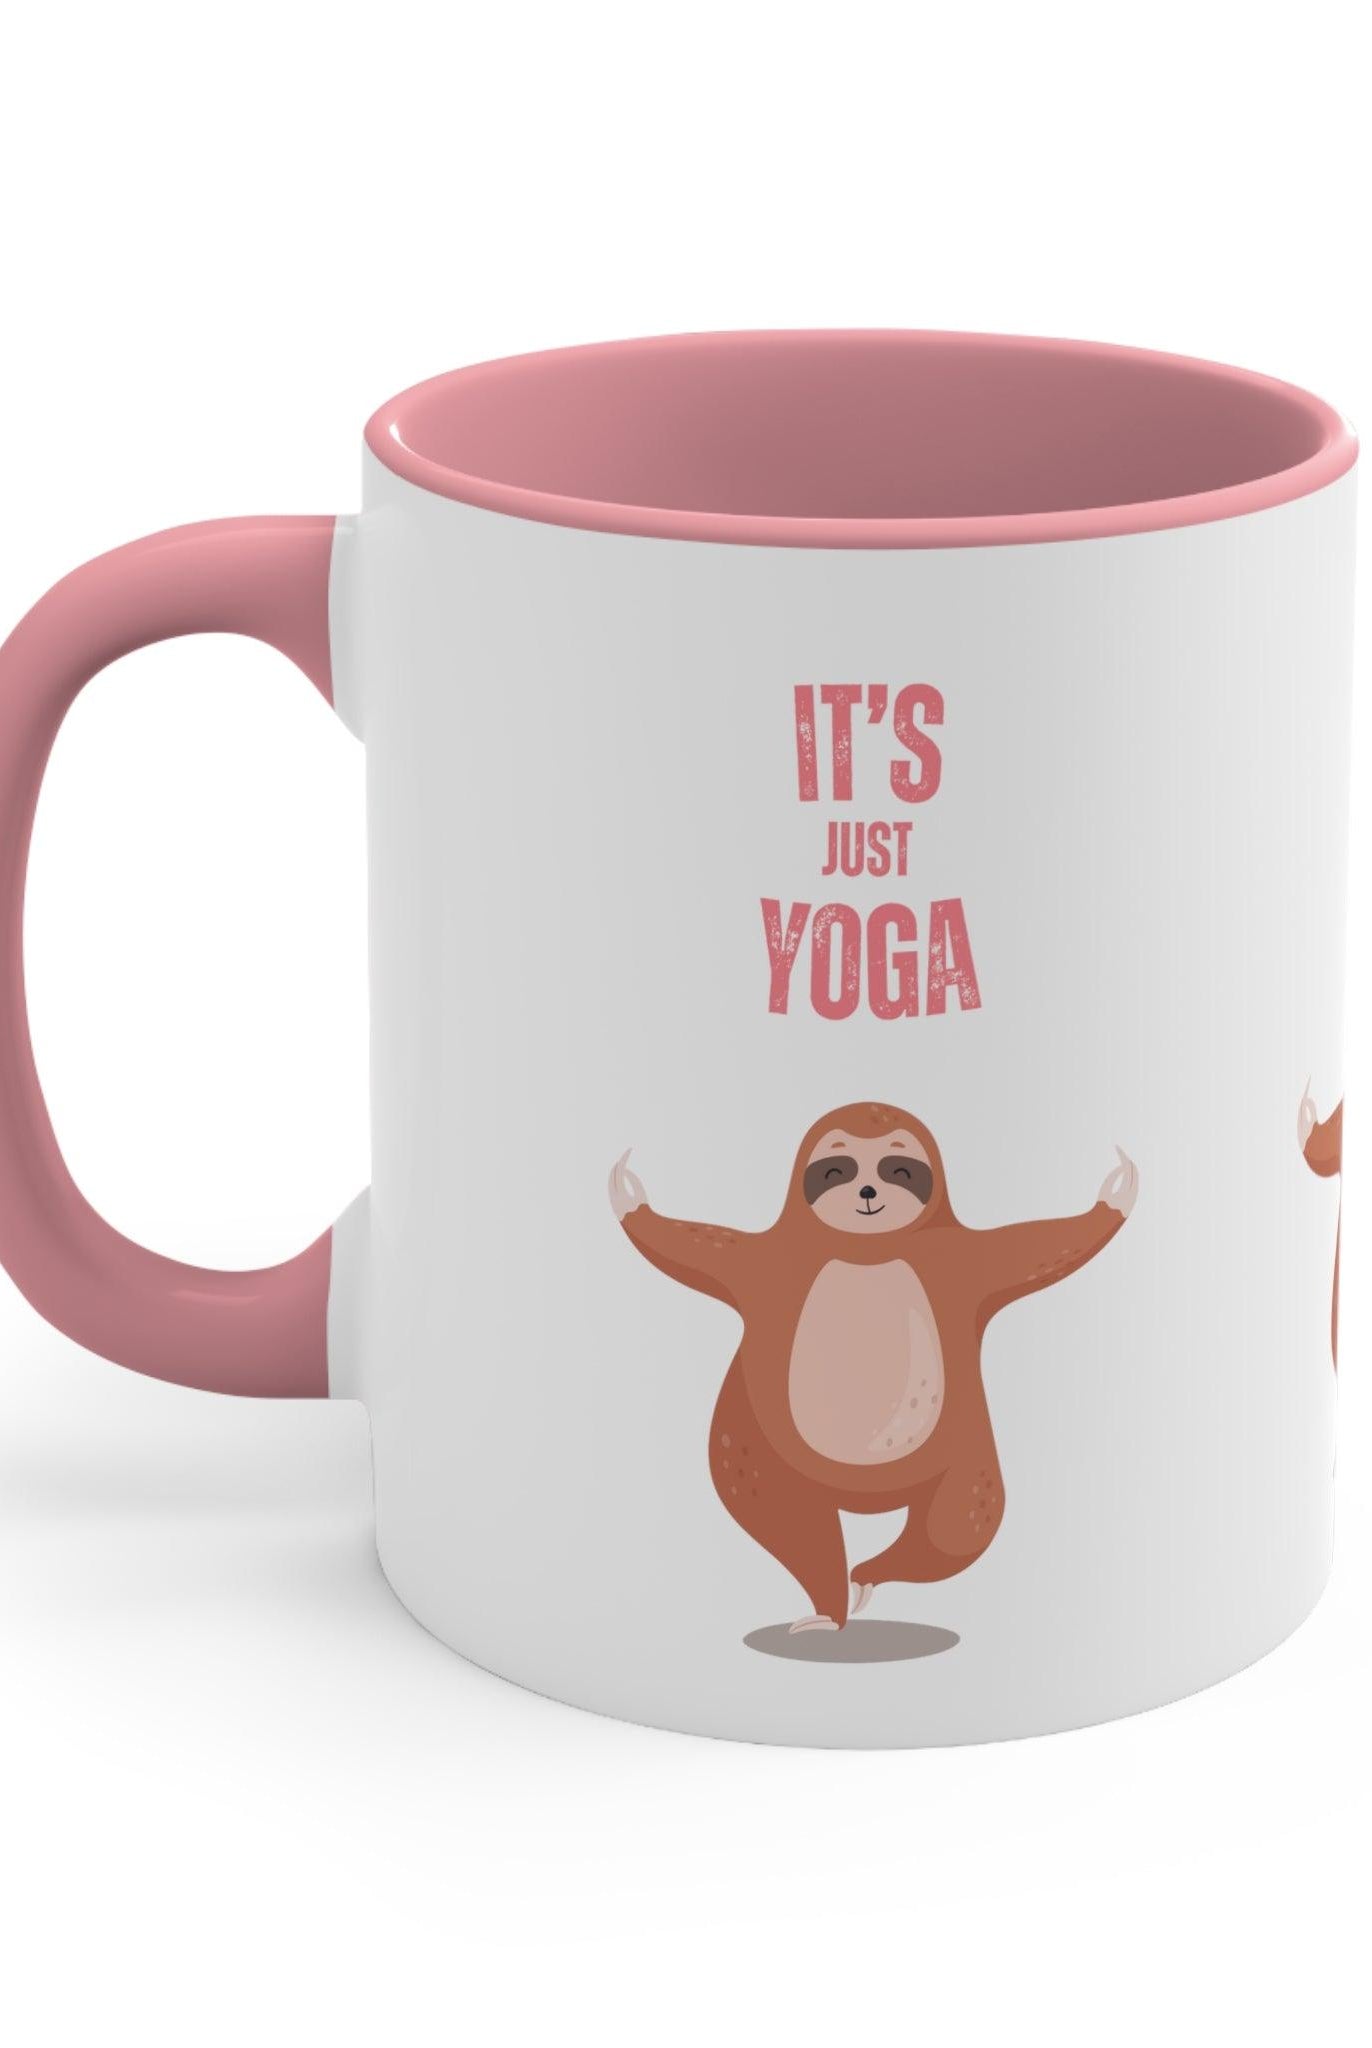 It's Just Yoga Pink - Accent Coffee Mug, 11oz - Soulshinecreators - 11 oz